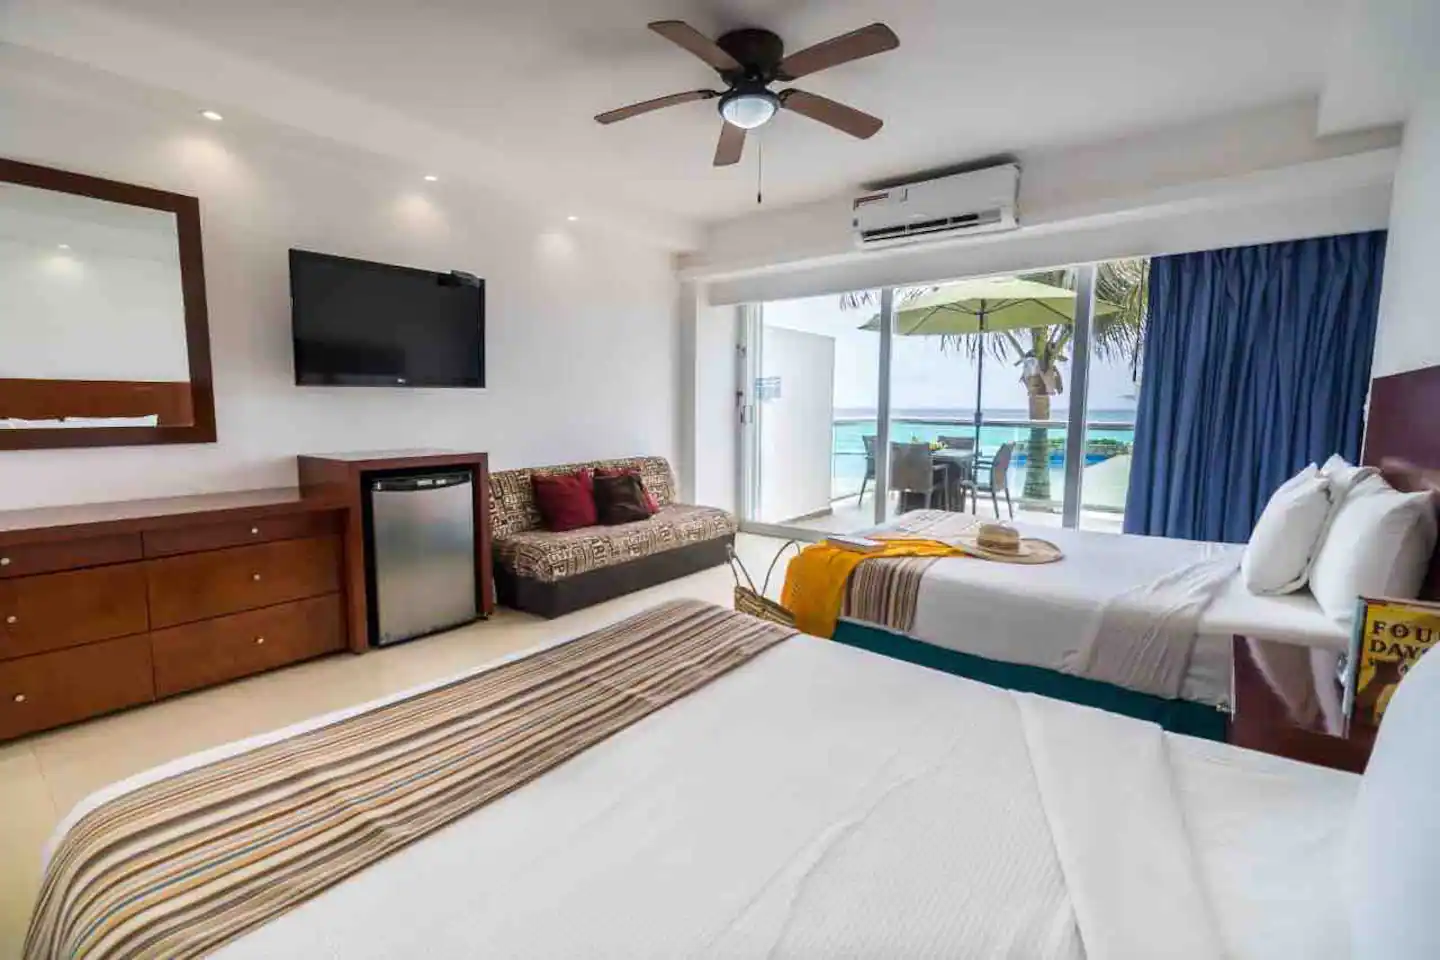 Ocean Dream (Planta Baja), one of the best Airbnbs in Cancun